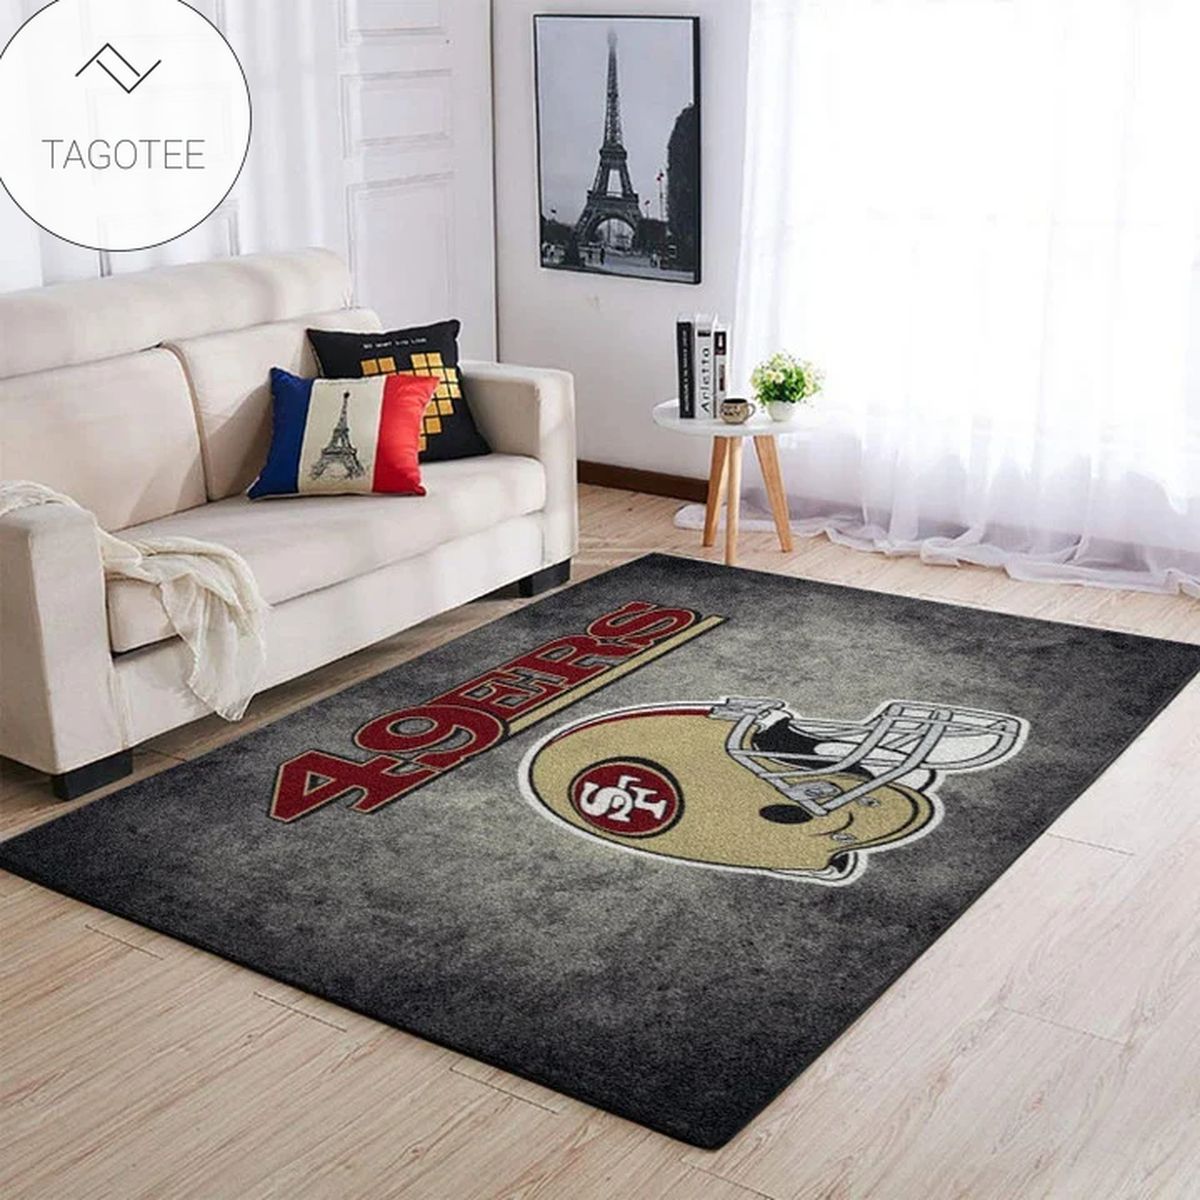 San Francisco 49ers Area Rug NFL Football Living Room Carpet Home Floor Decor